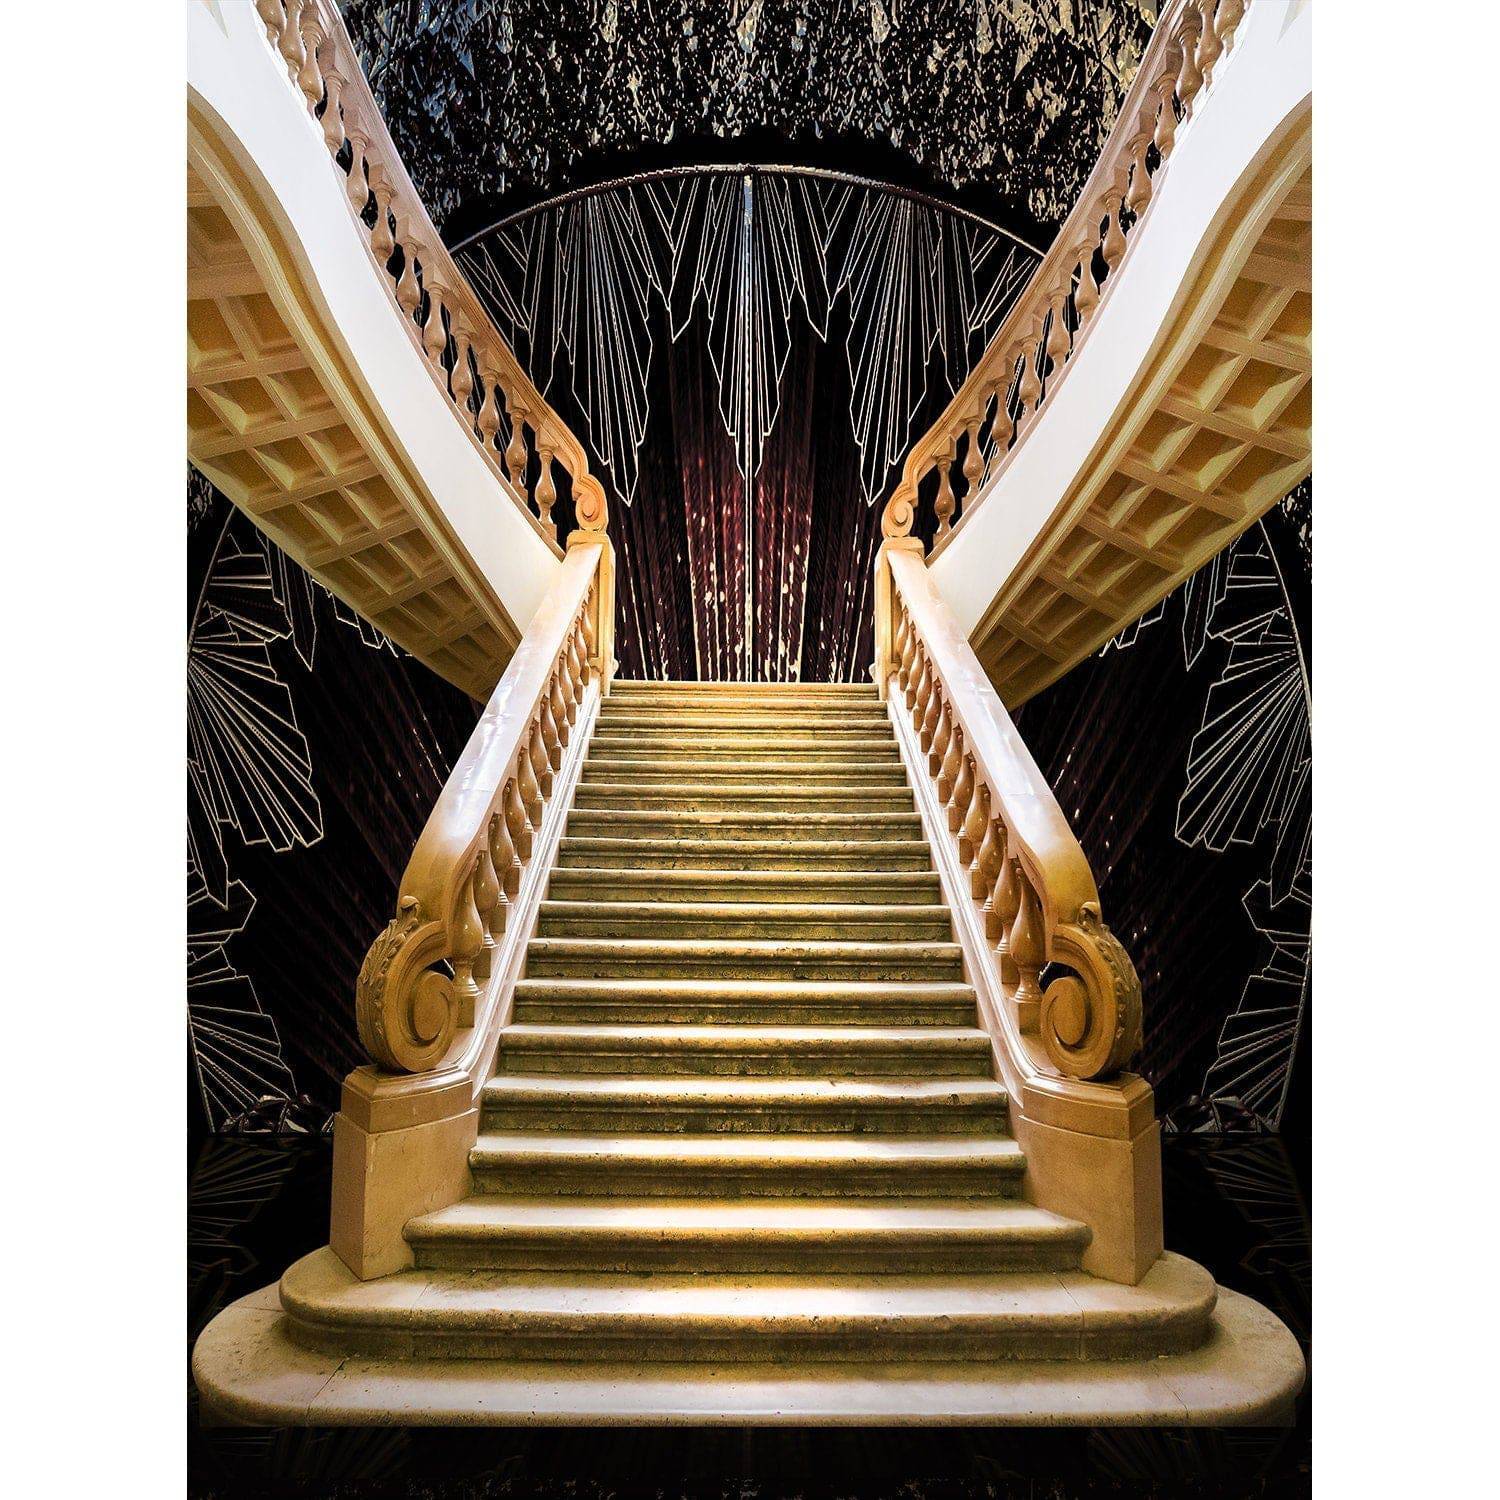 1920s Art Deco Staircase Photo Backdrop - Pro 6  x 8  